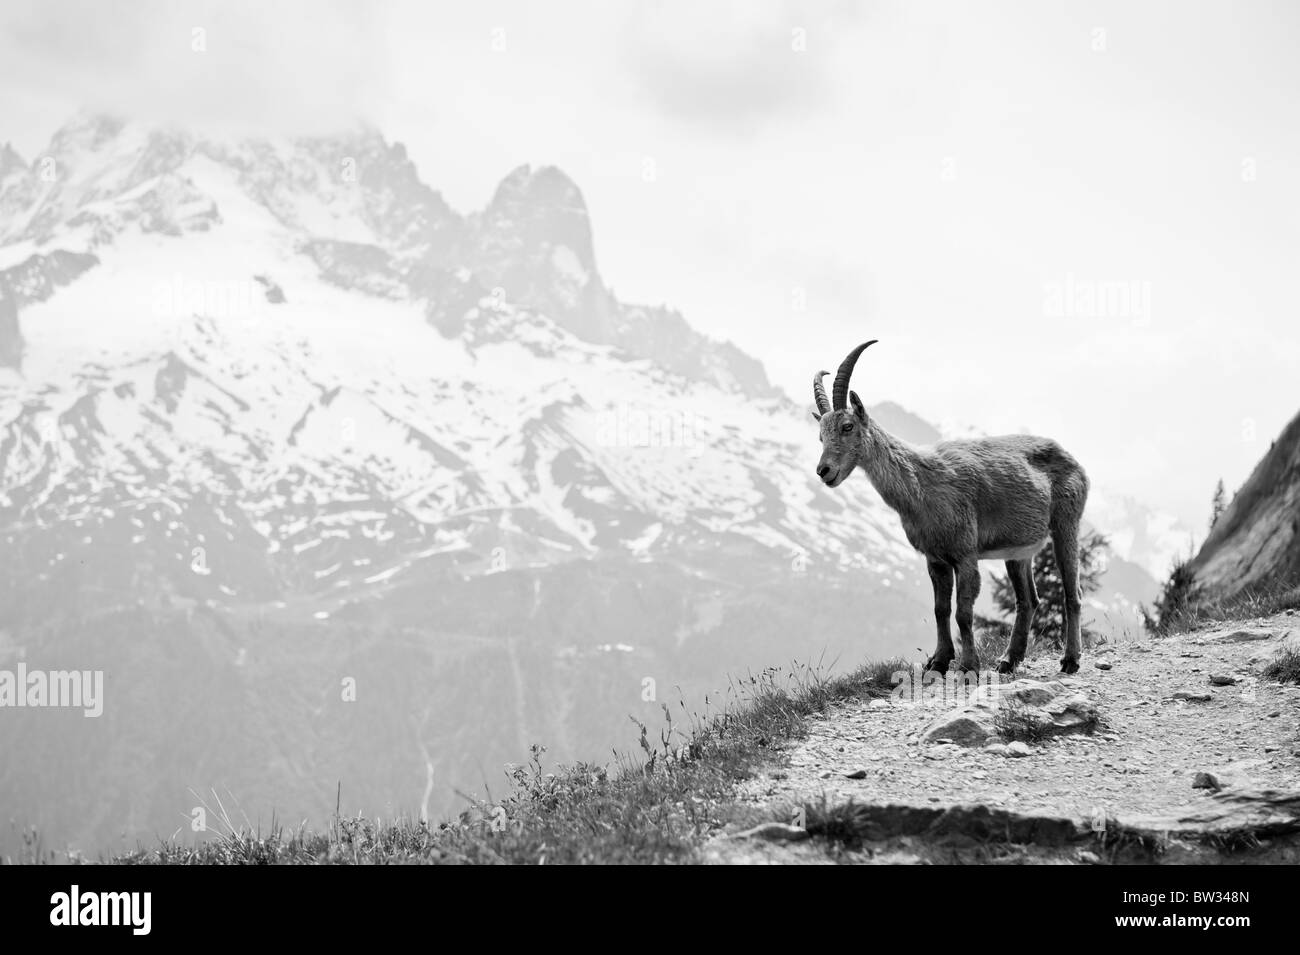 Wild mountain goat - Capra ibex on a cliff in French Alps. Black and white monochrome image Stock Photo